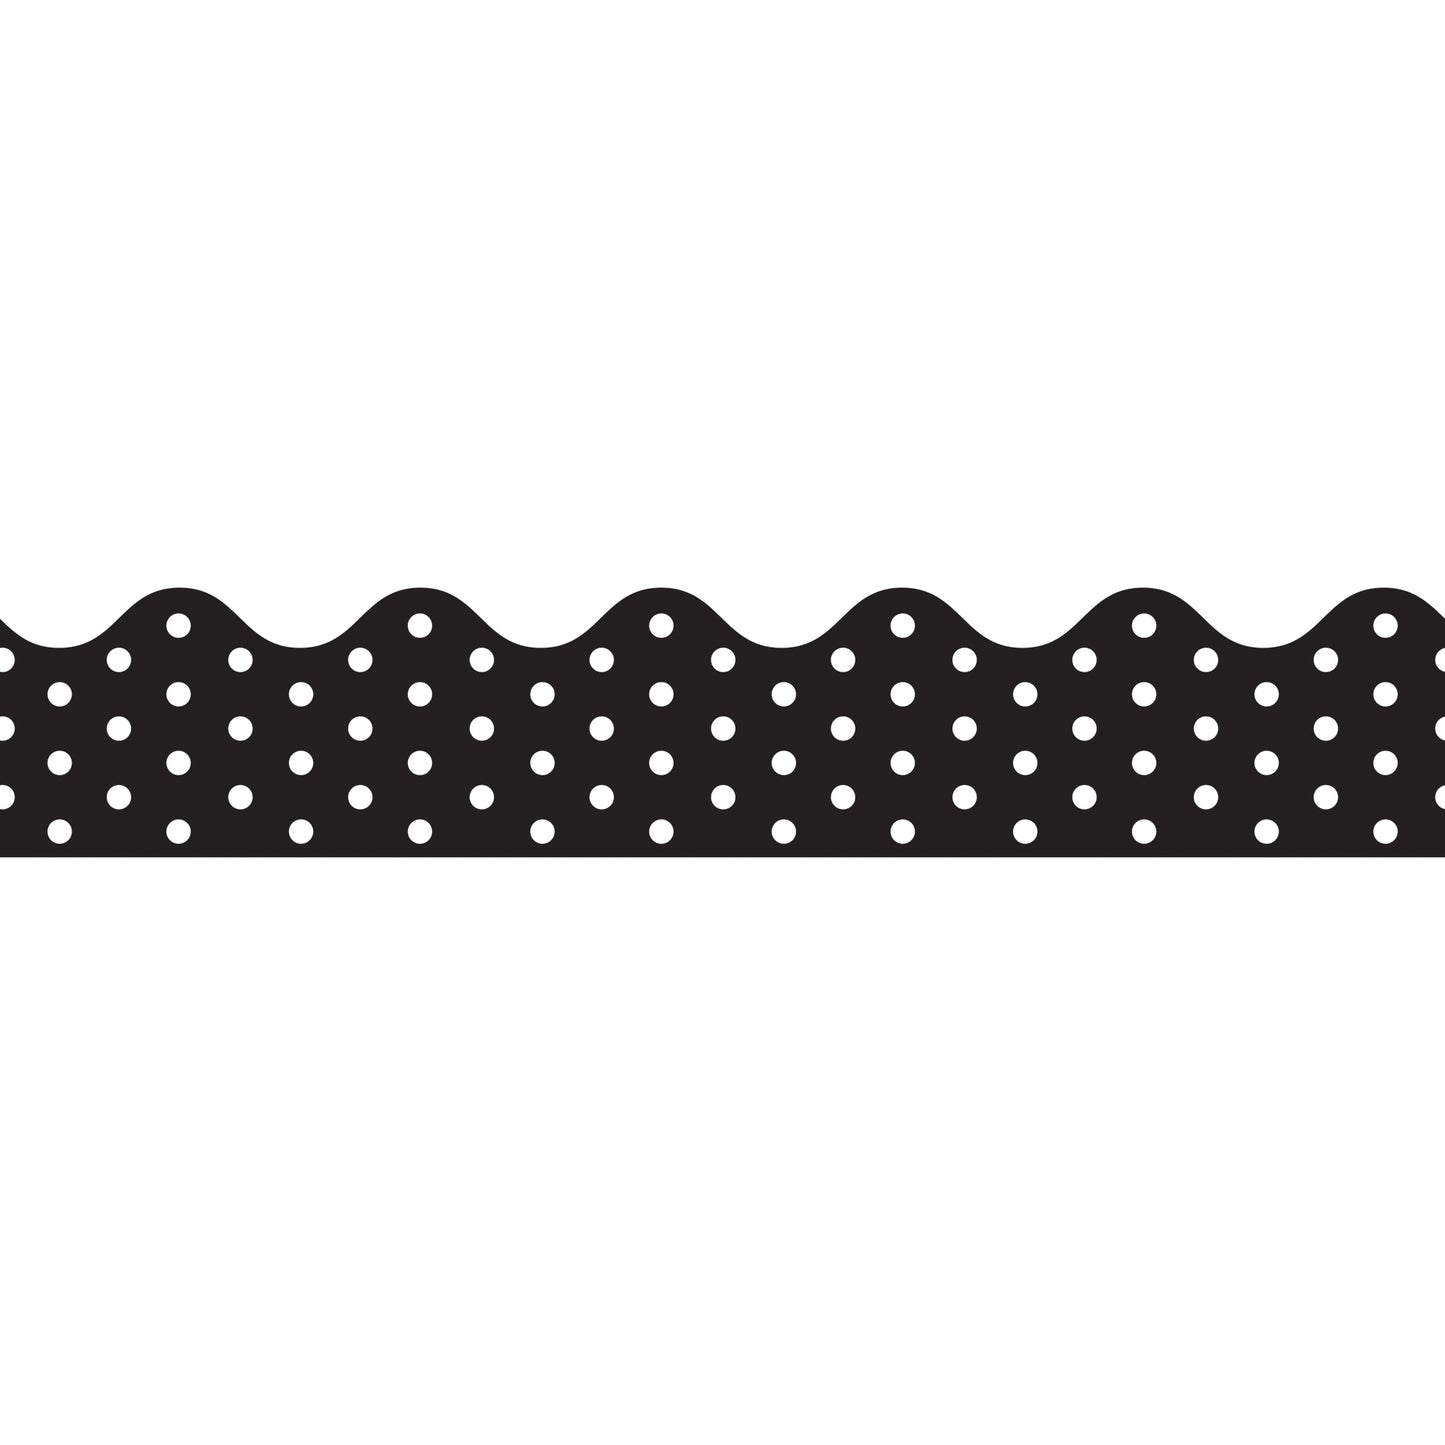 Black & White Dots Rolled Scalloped Border, 36 Feet Per Roll, 6 Rolls